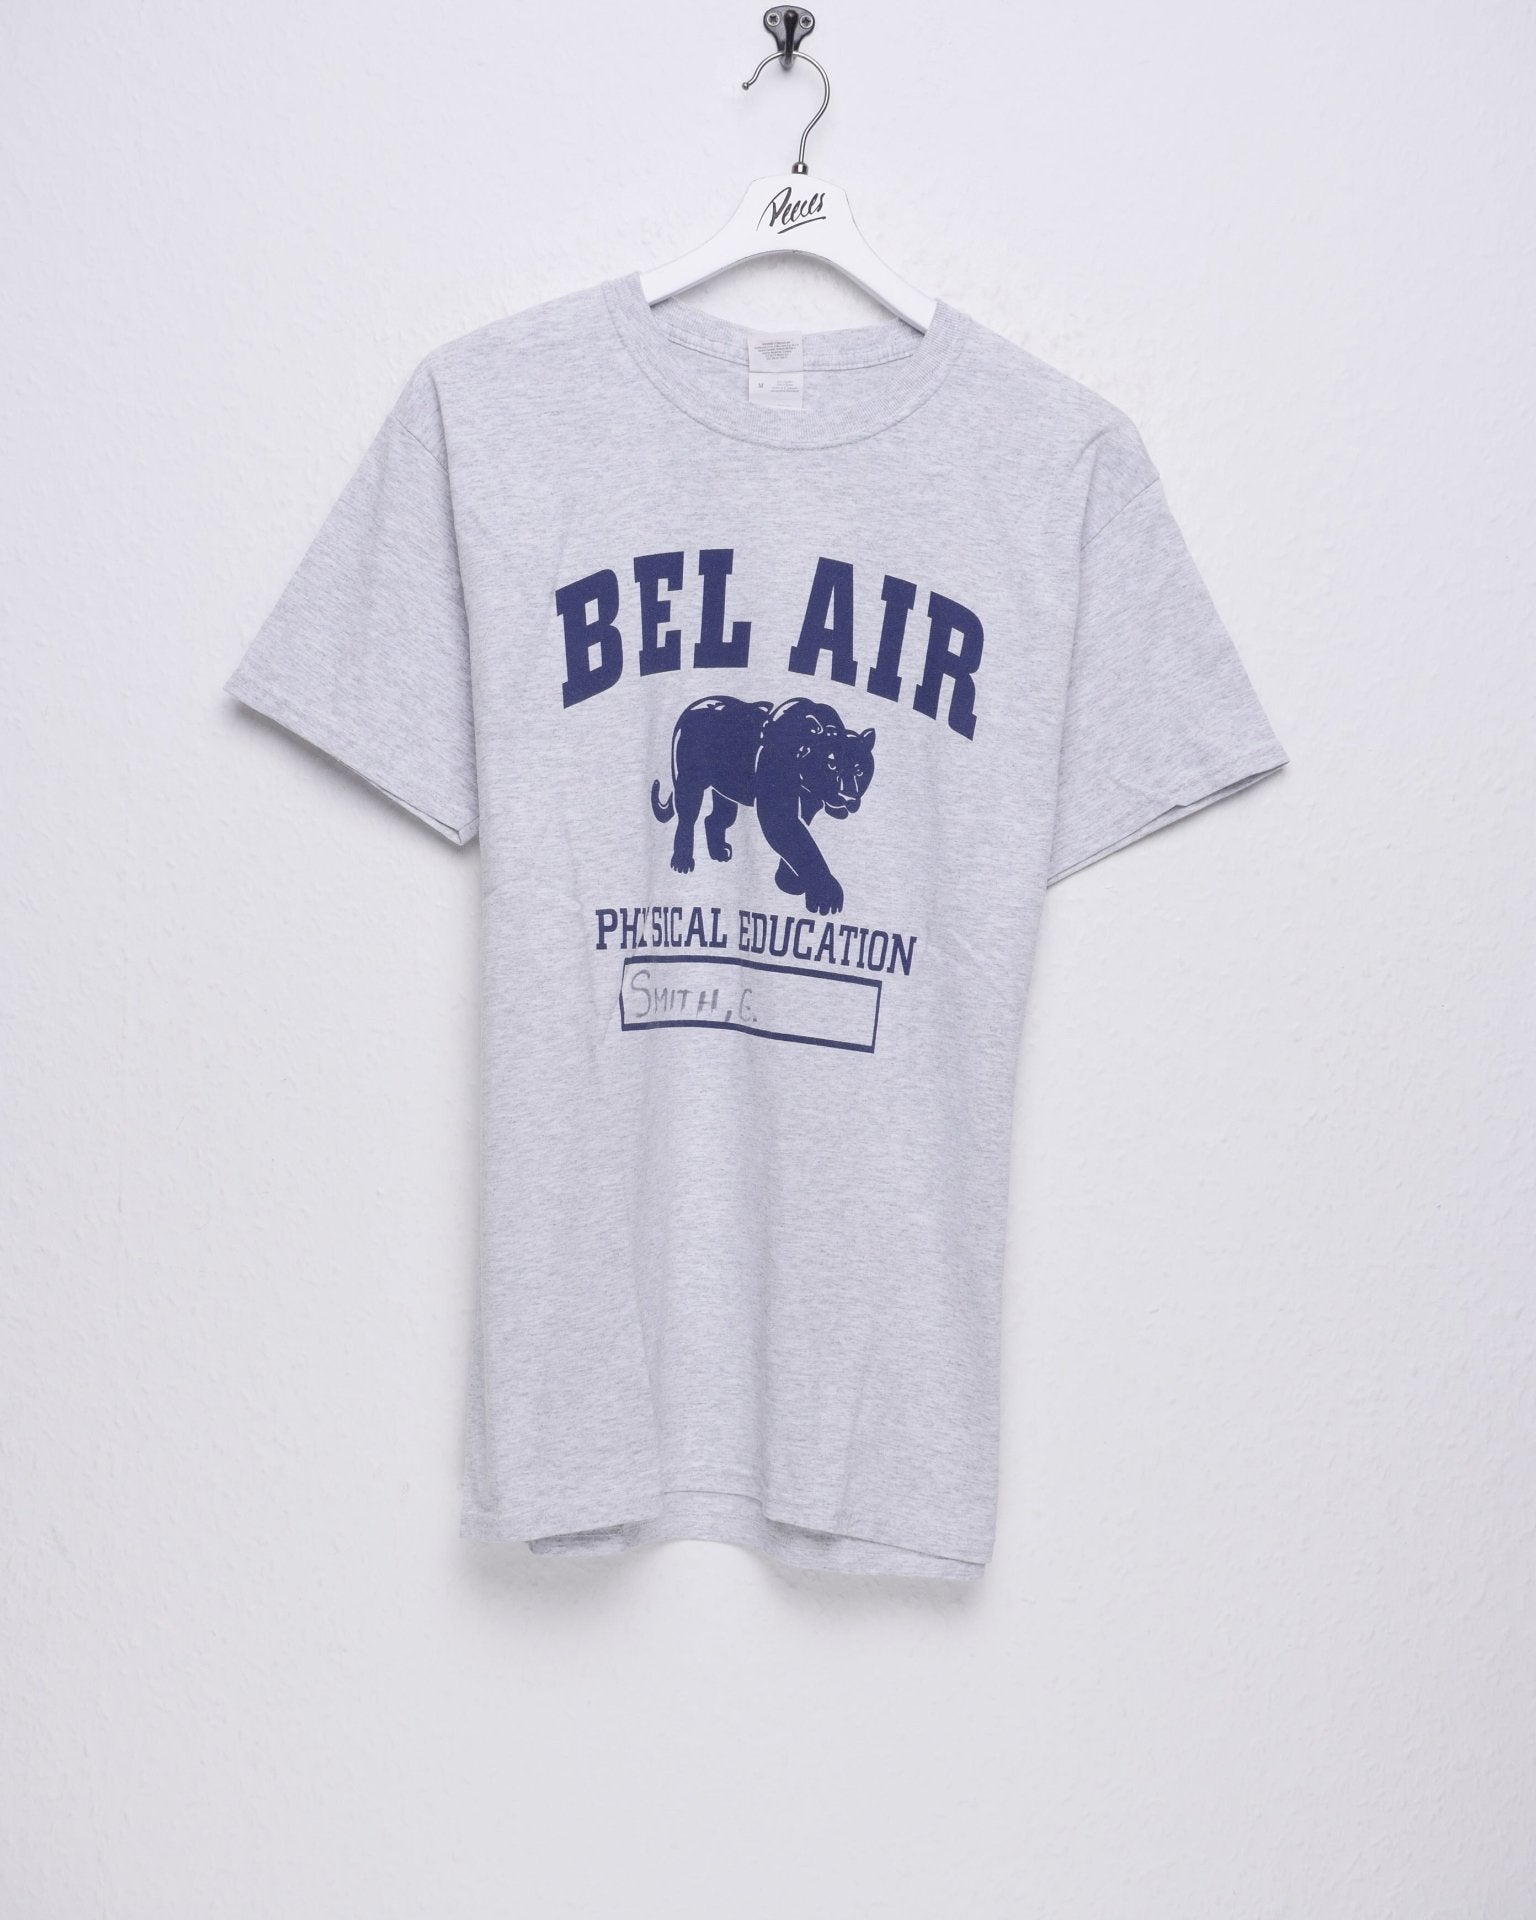 Bel Air Physical Education printed Logo Shirt - Peeces